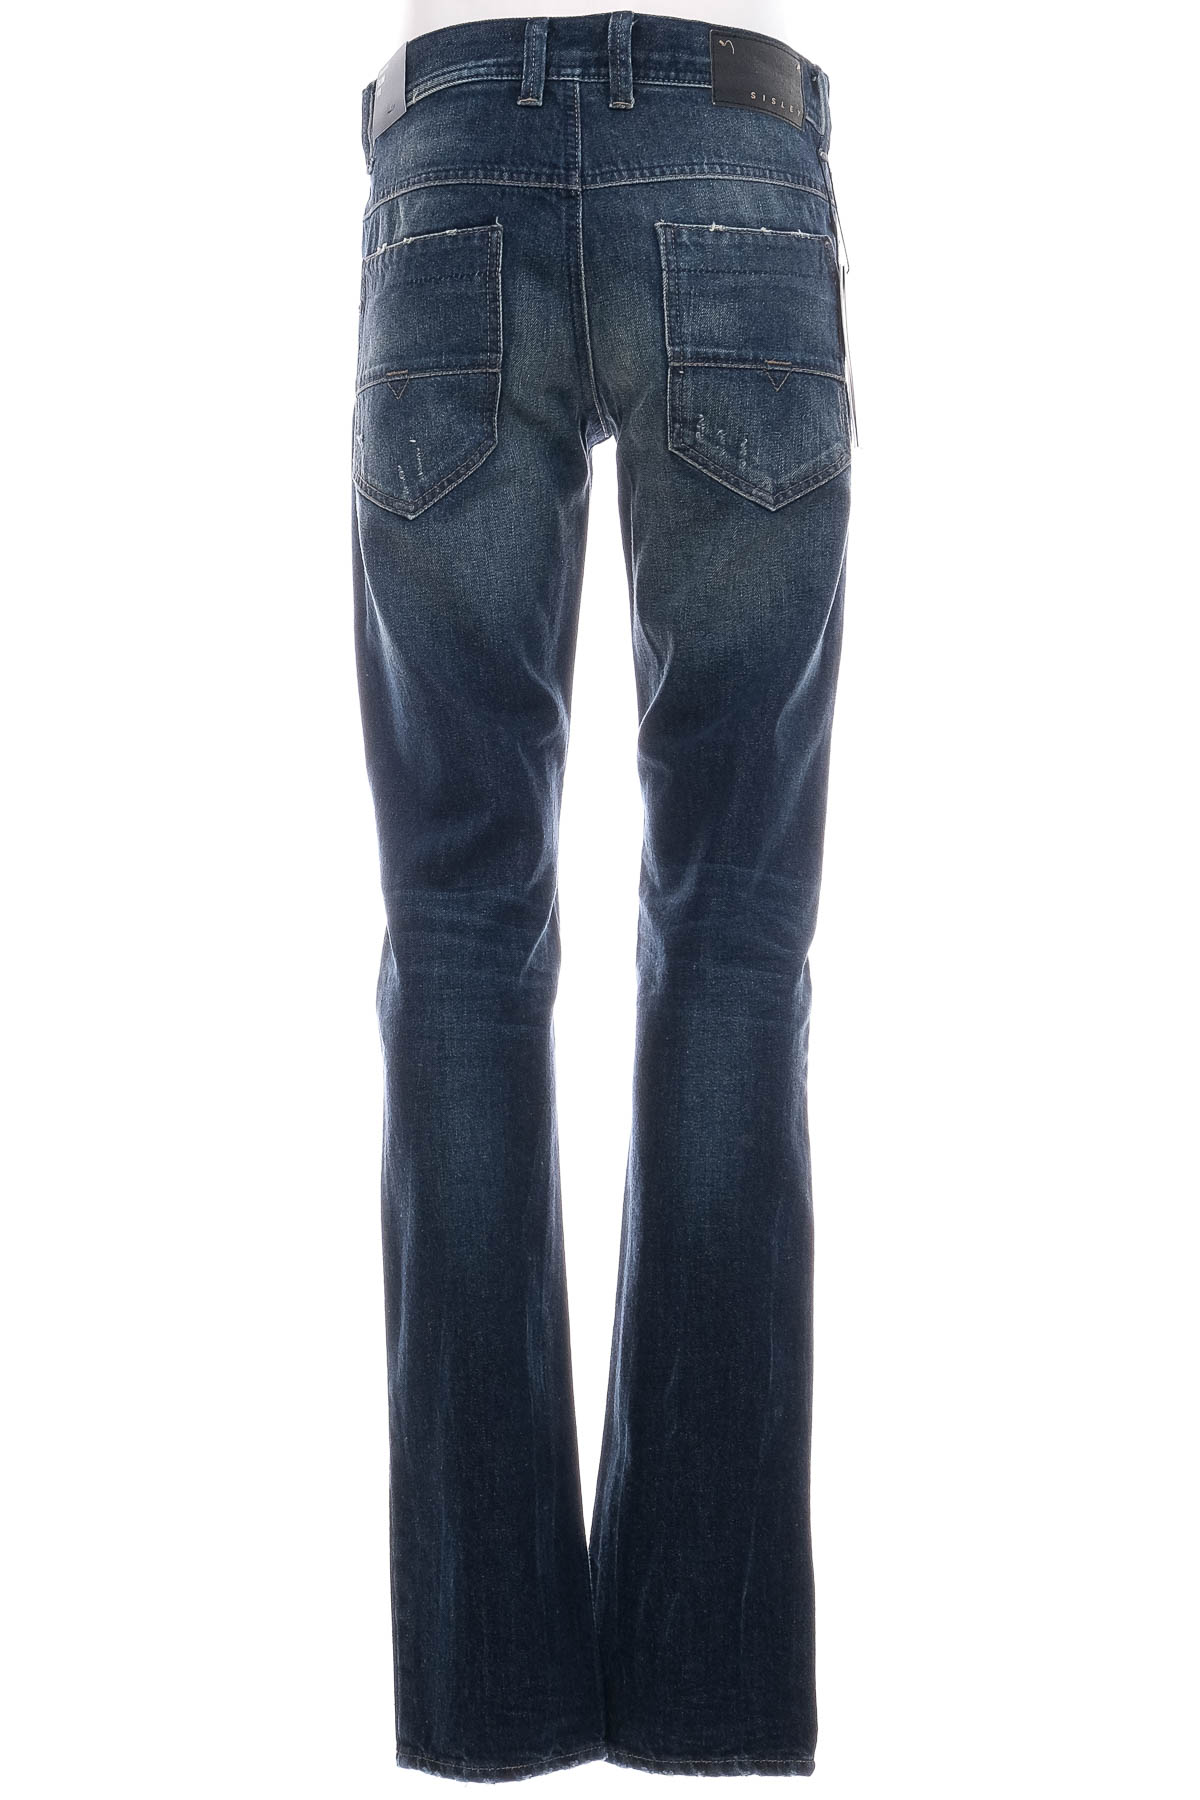 Men's jeans - Sisley - 1